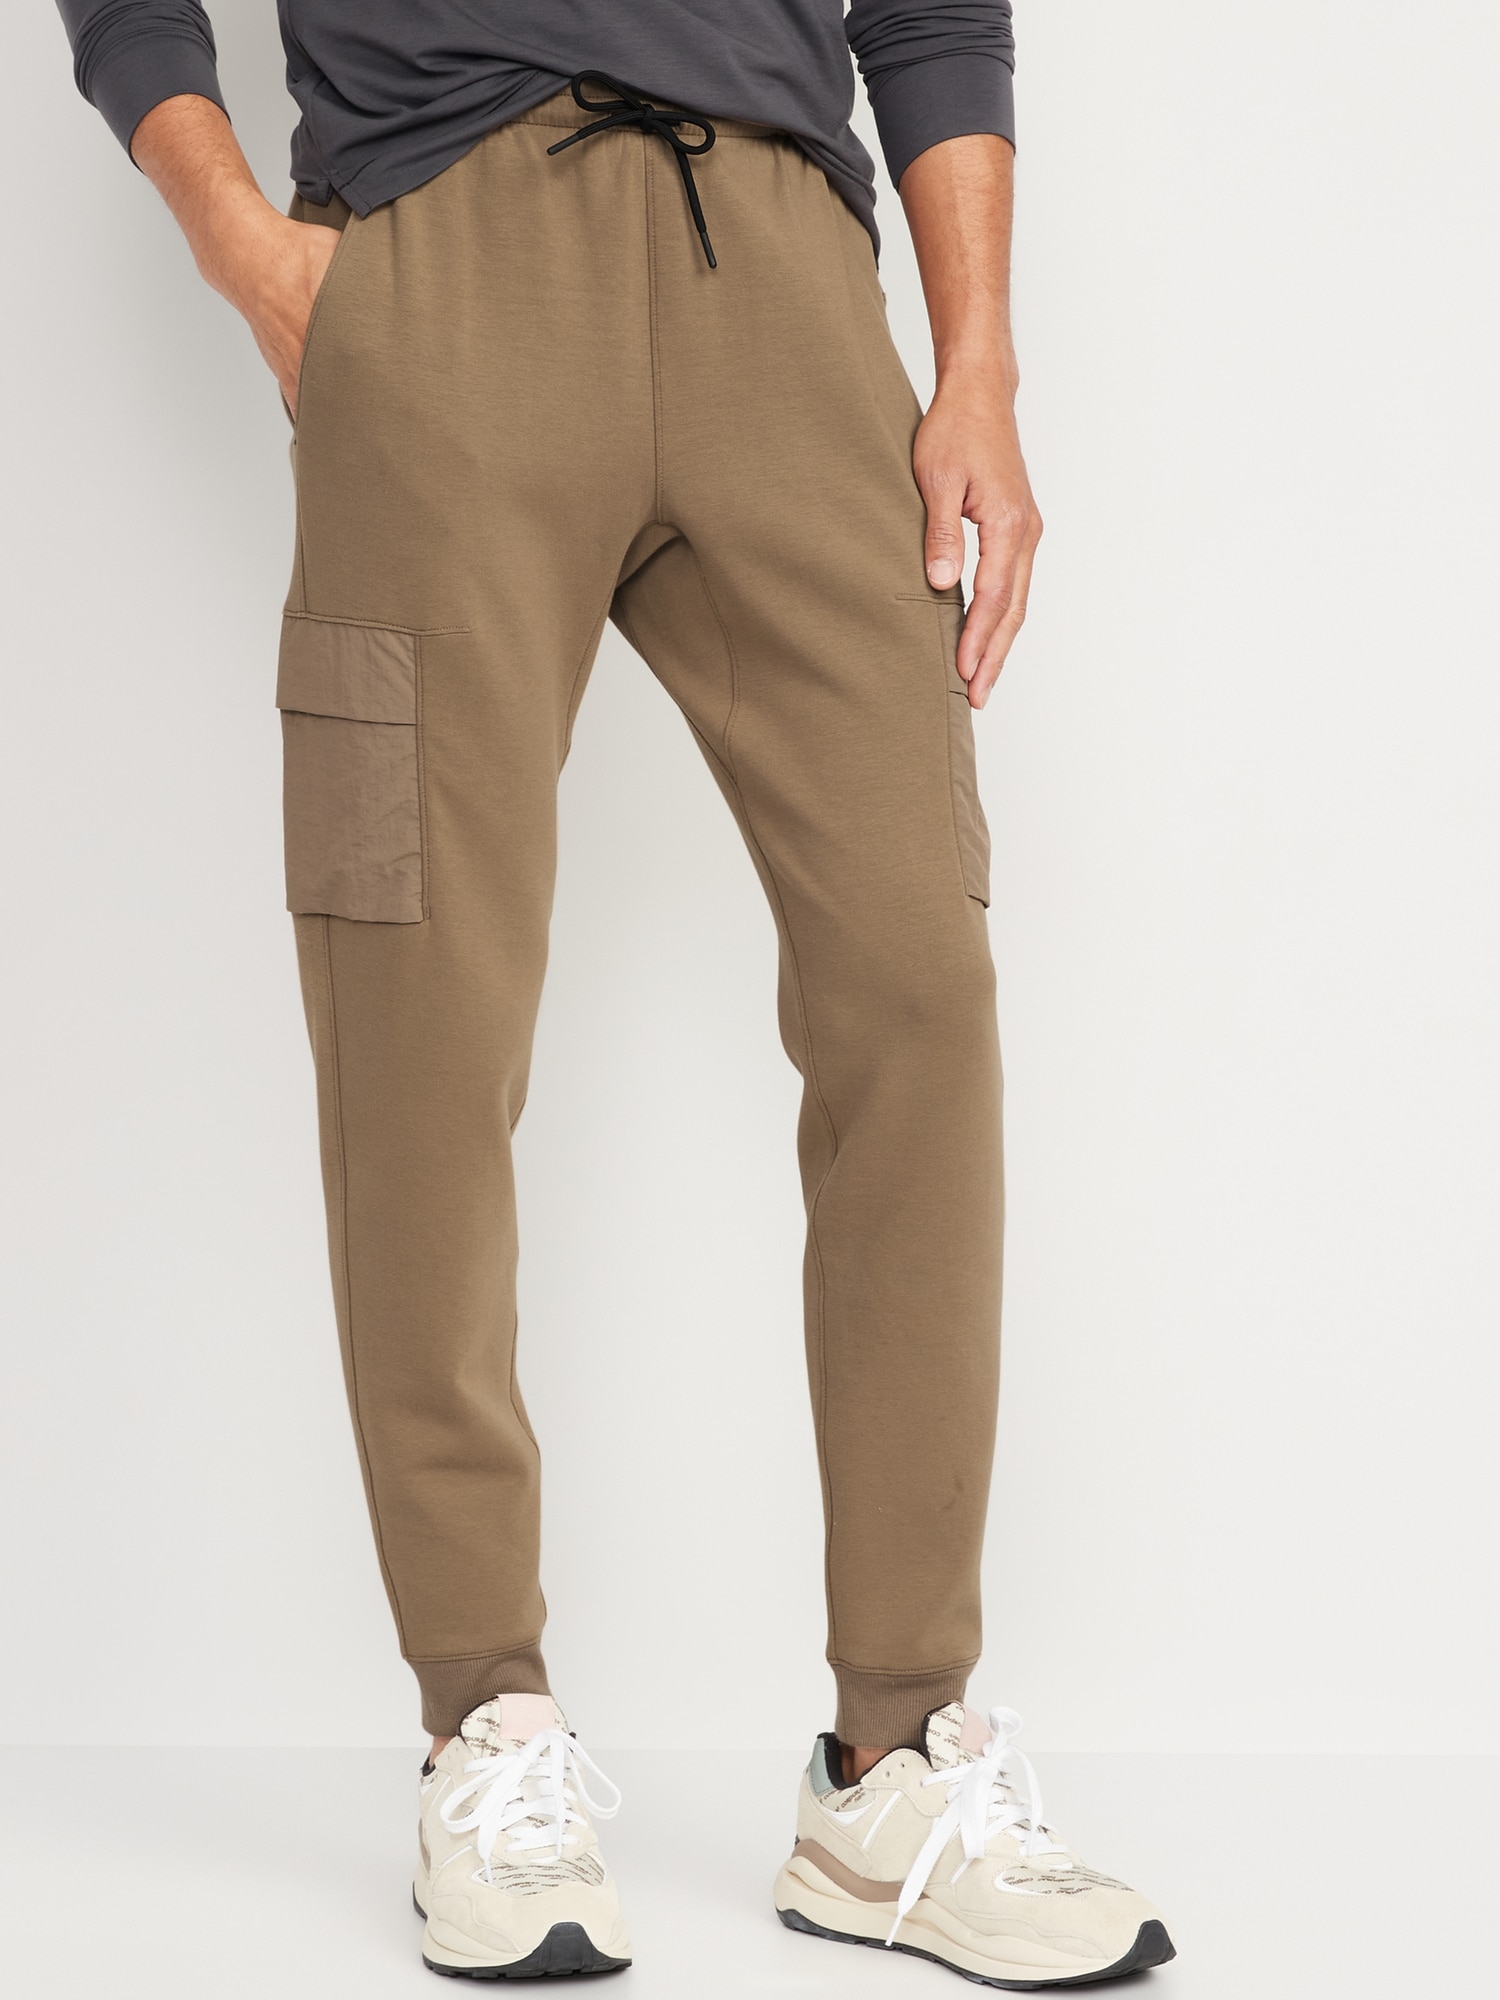 Old Navy 100% Silk Cargo Pants for Men | Mercari